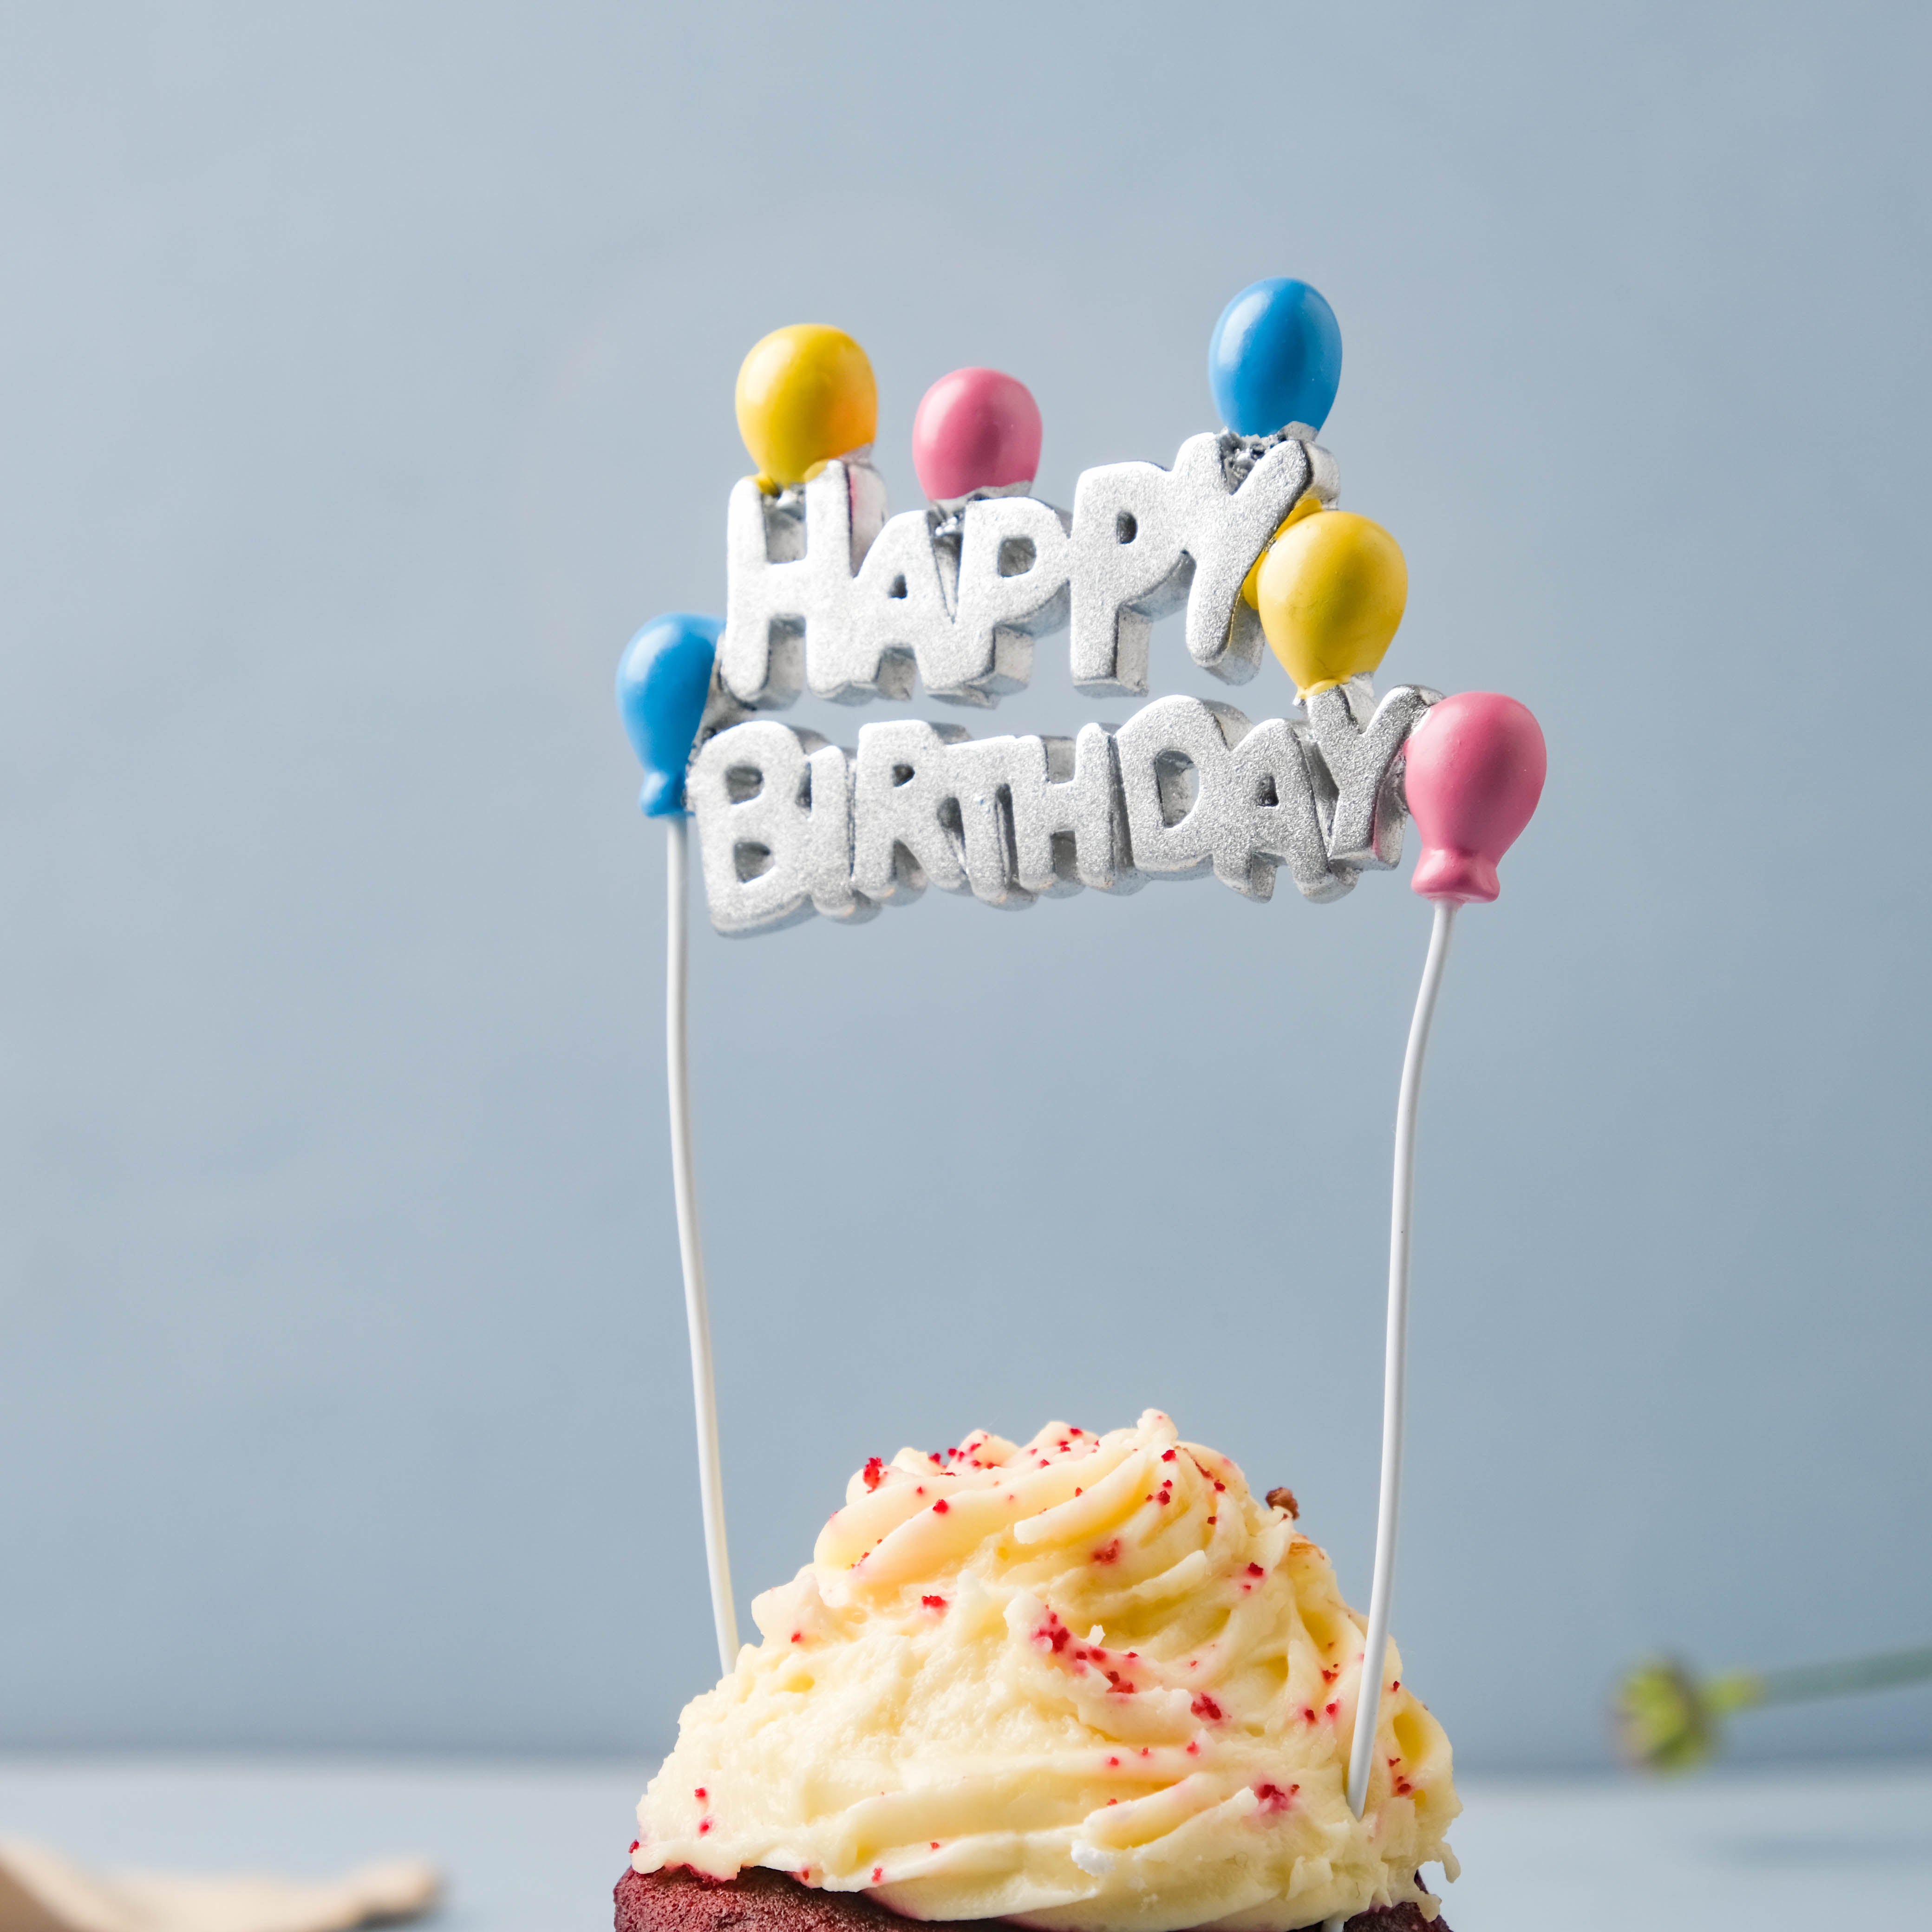 Annu Happy Birthday Cakes Pics Gallery